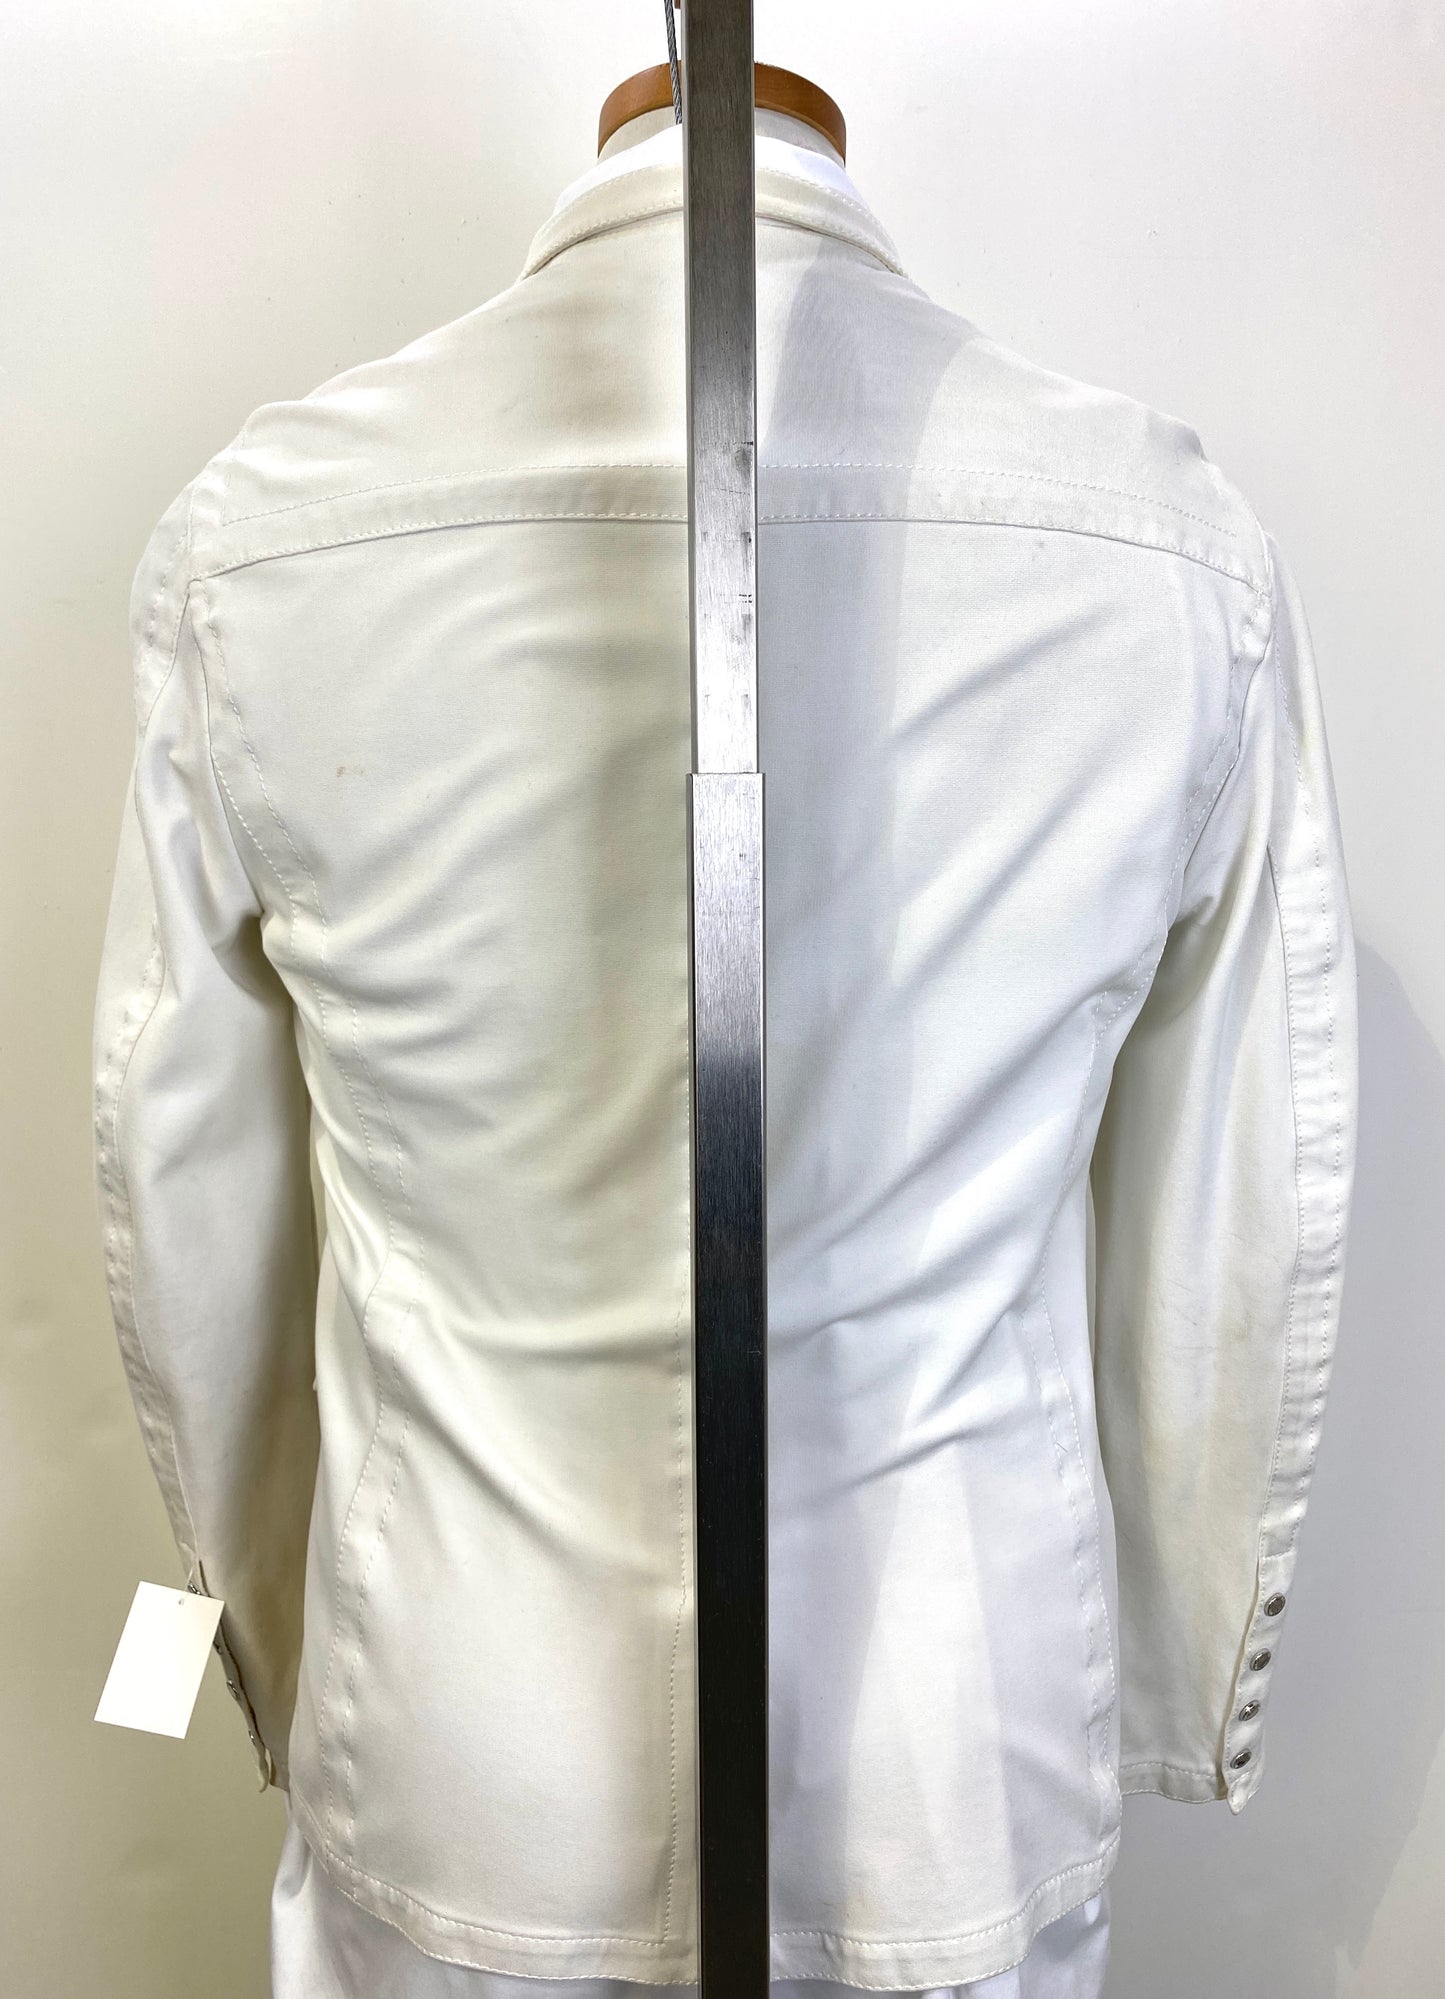 1990s Vintage Blazer, White Sports Jacket, Dirk Bikkemburgs Sport Couture, C38, AS IS